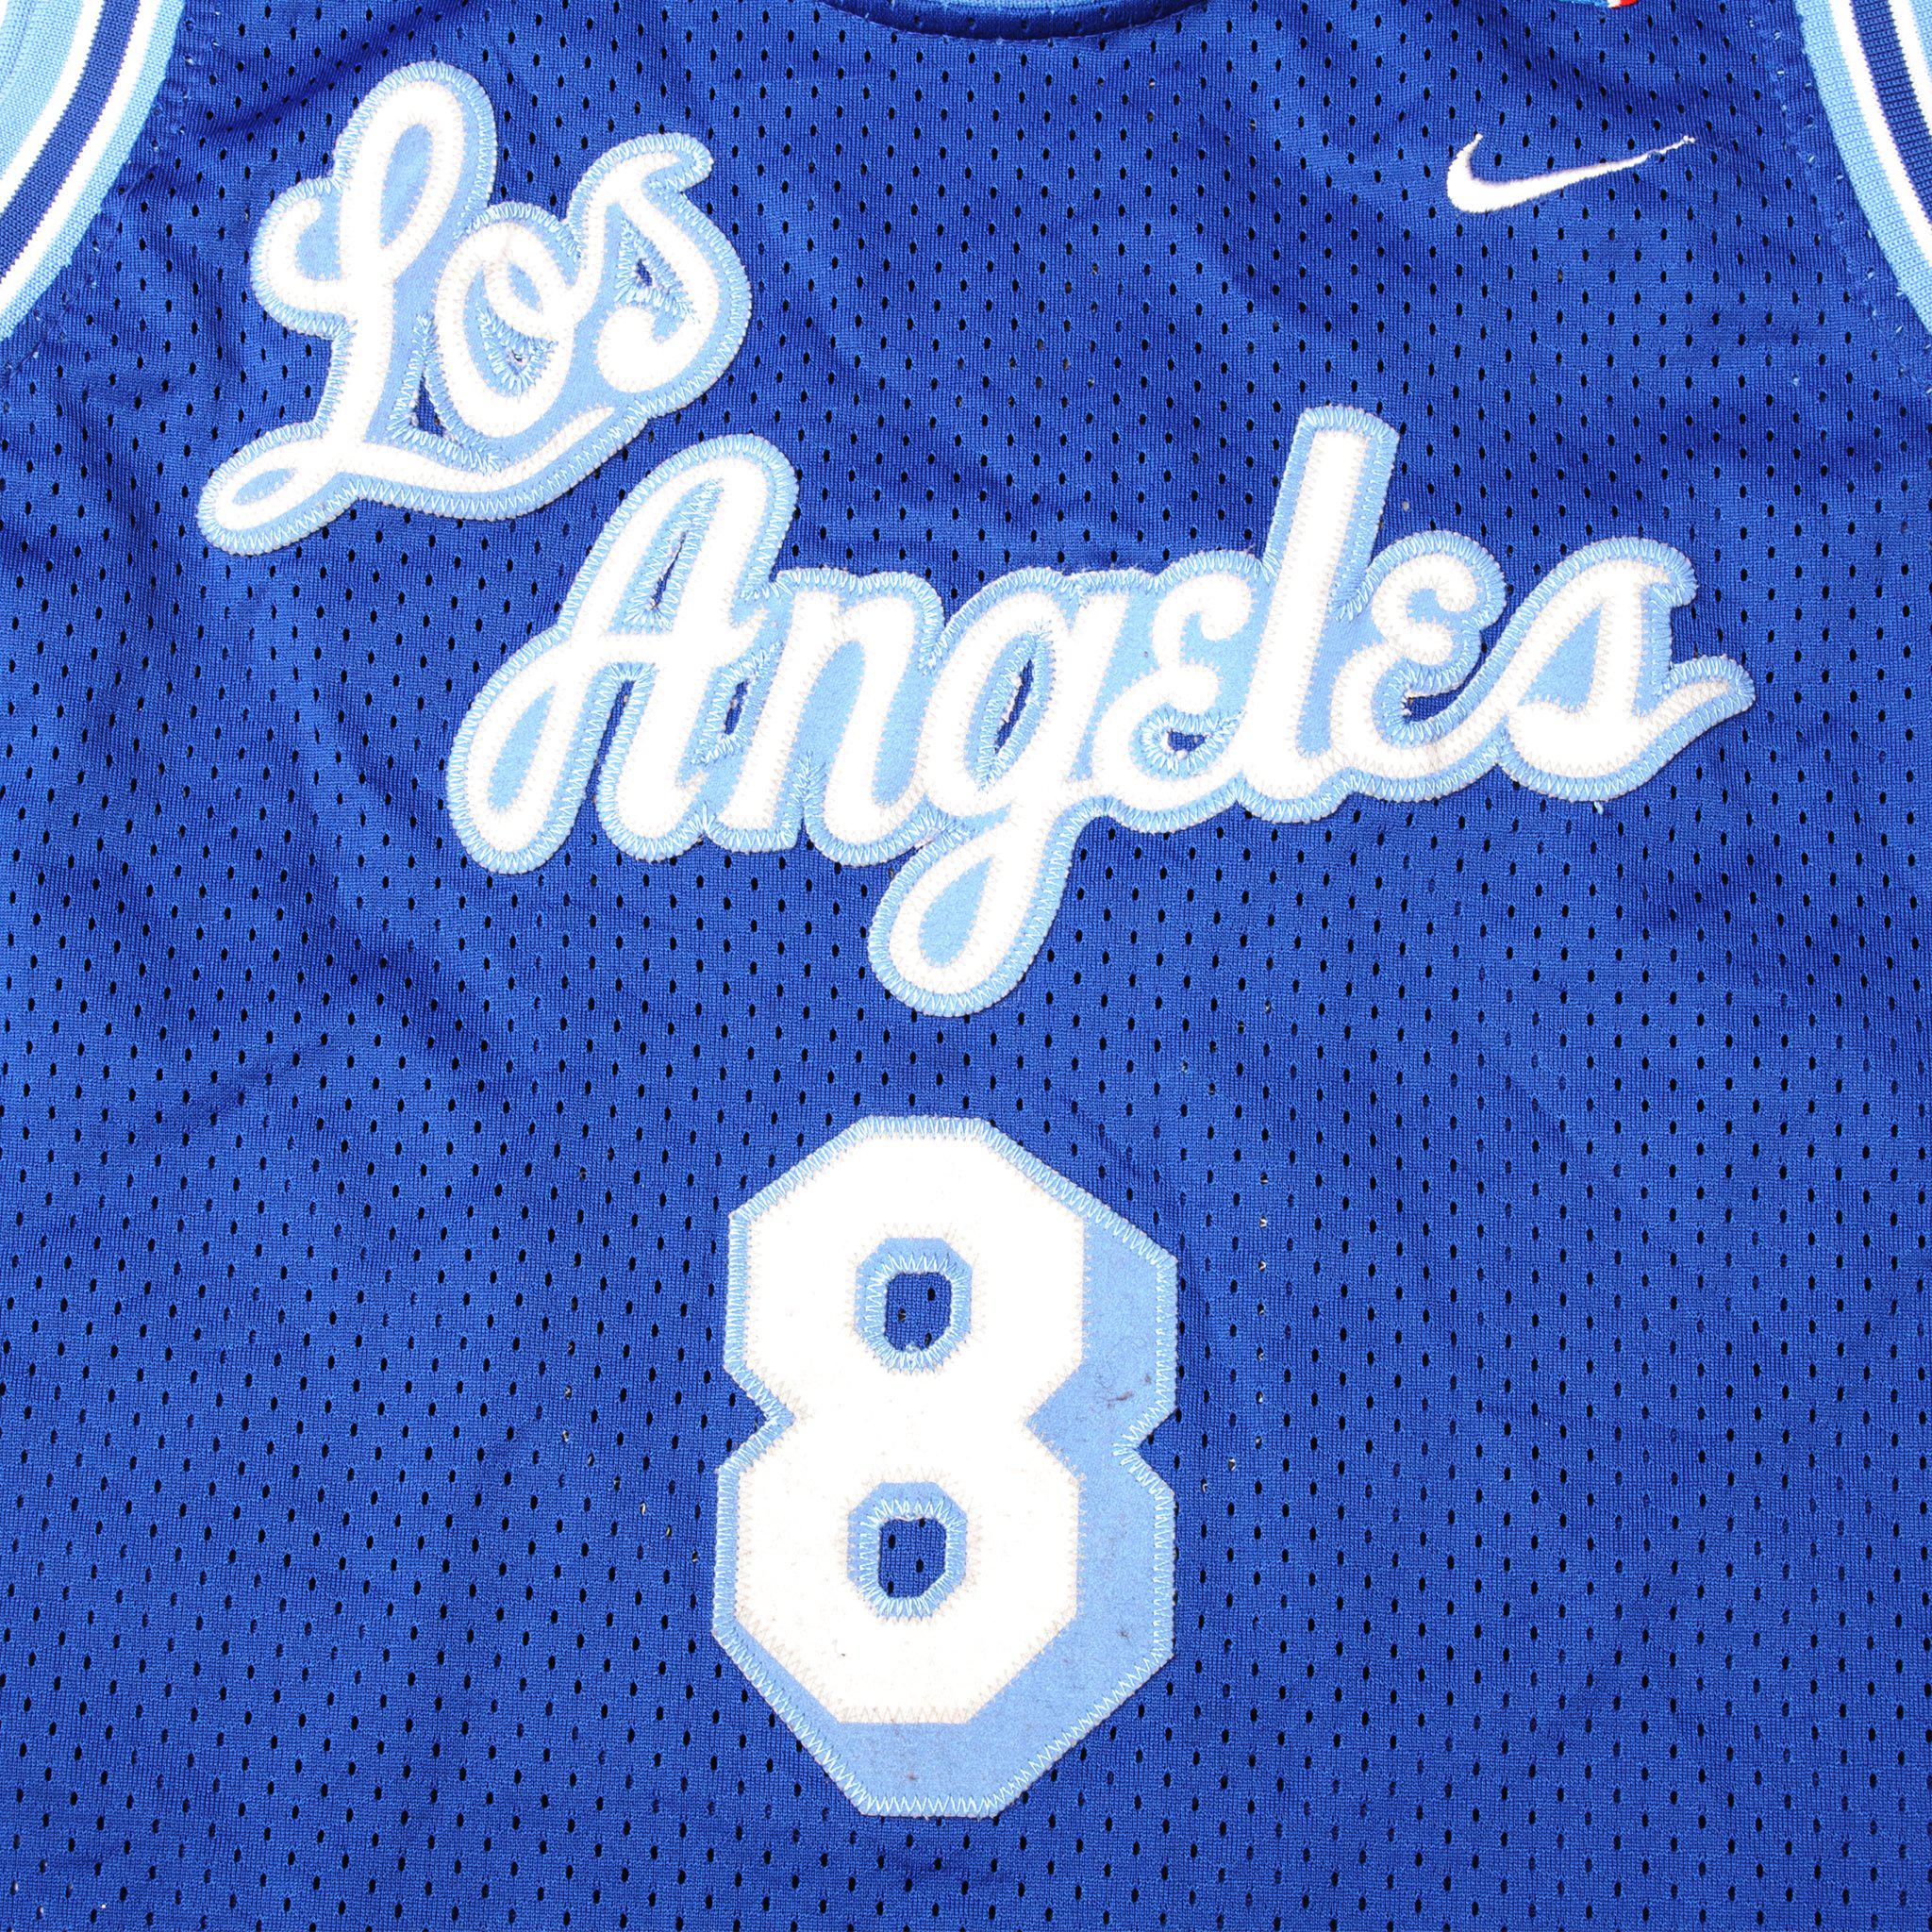 Vintage Los Angeles Lakers Kobe Bryant Swingman Jersey by Nike Size XXL Blue